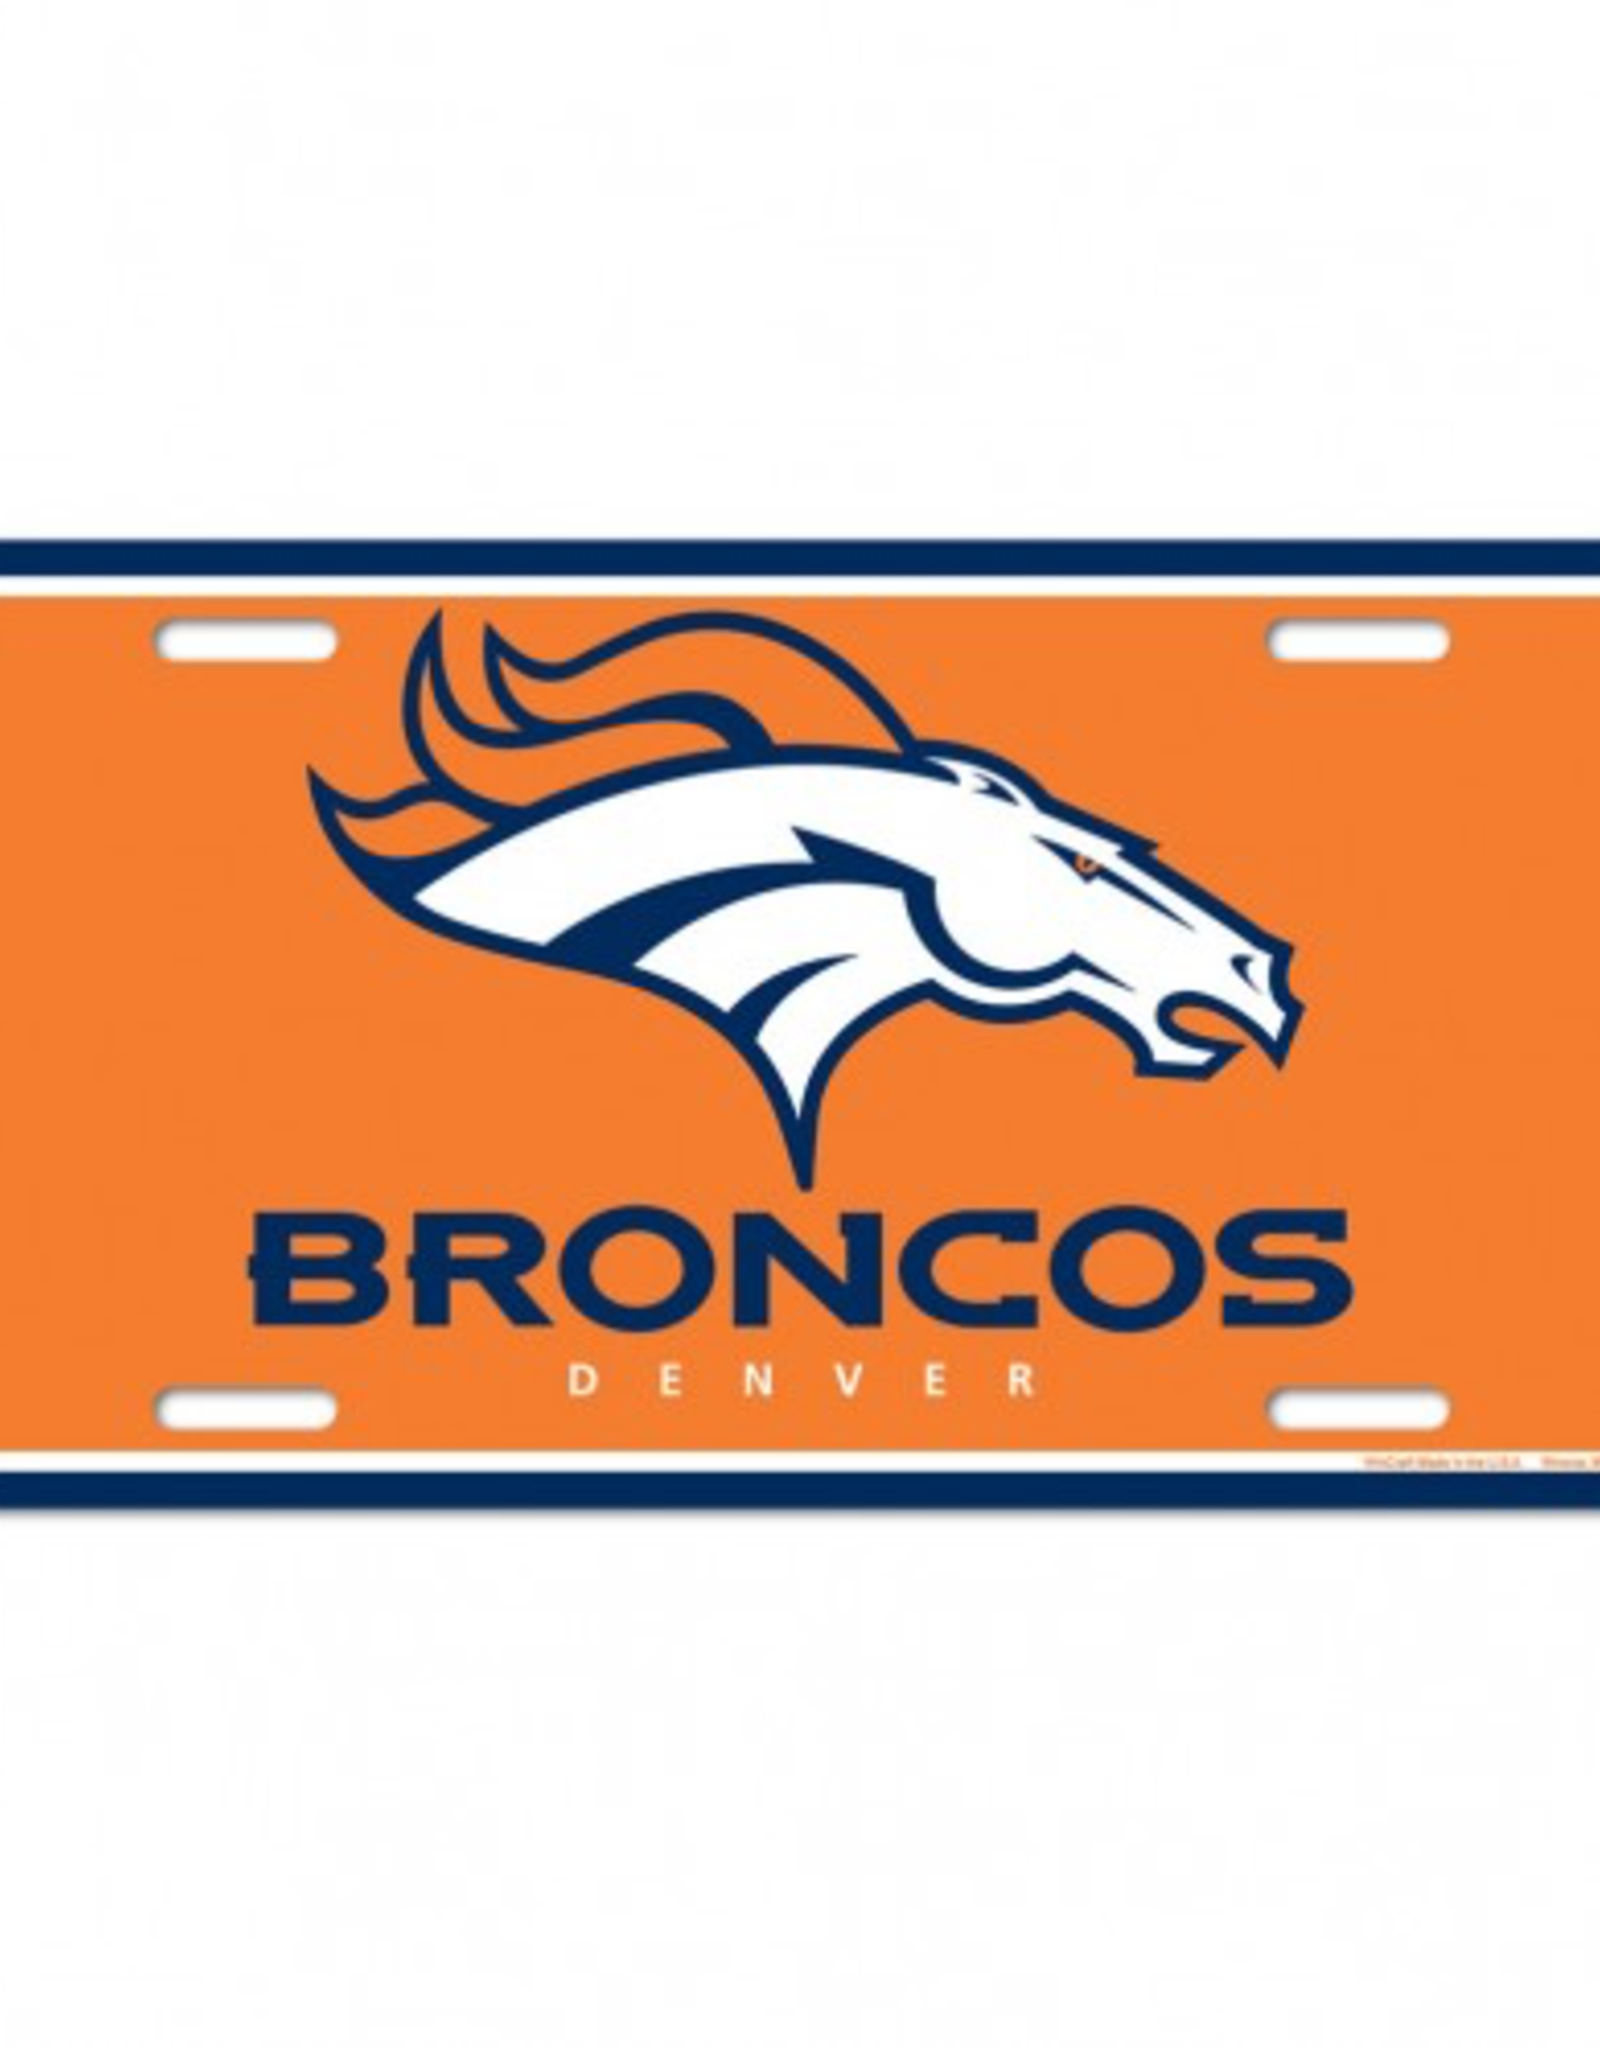 WINCRAFT Denver Broncos License Plate